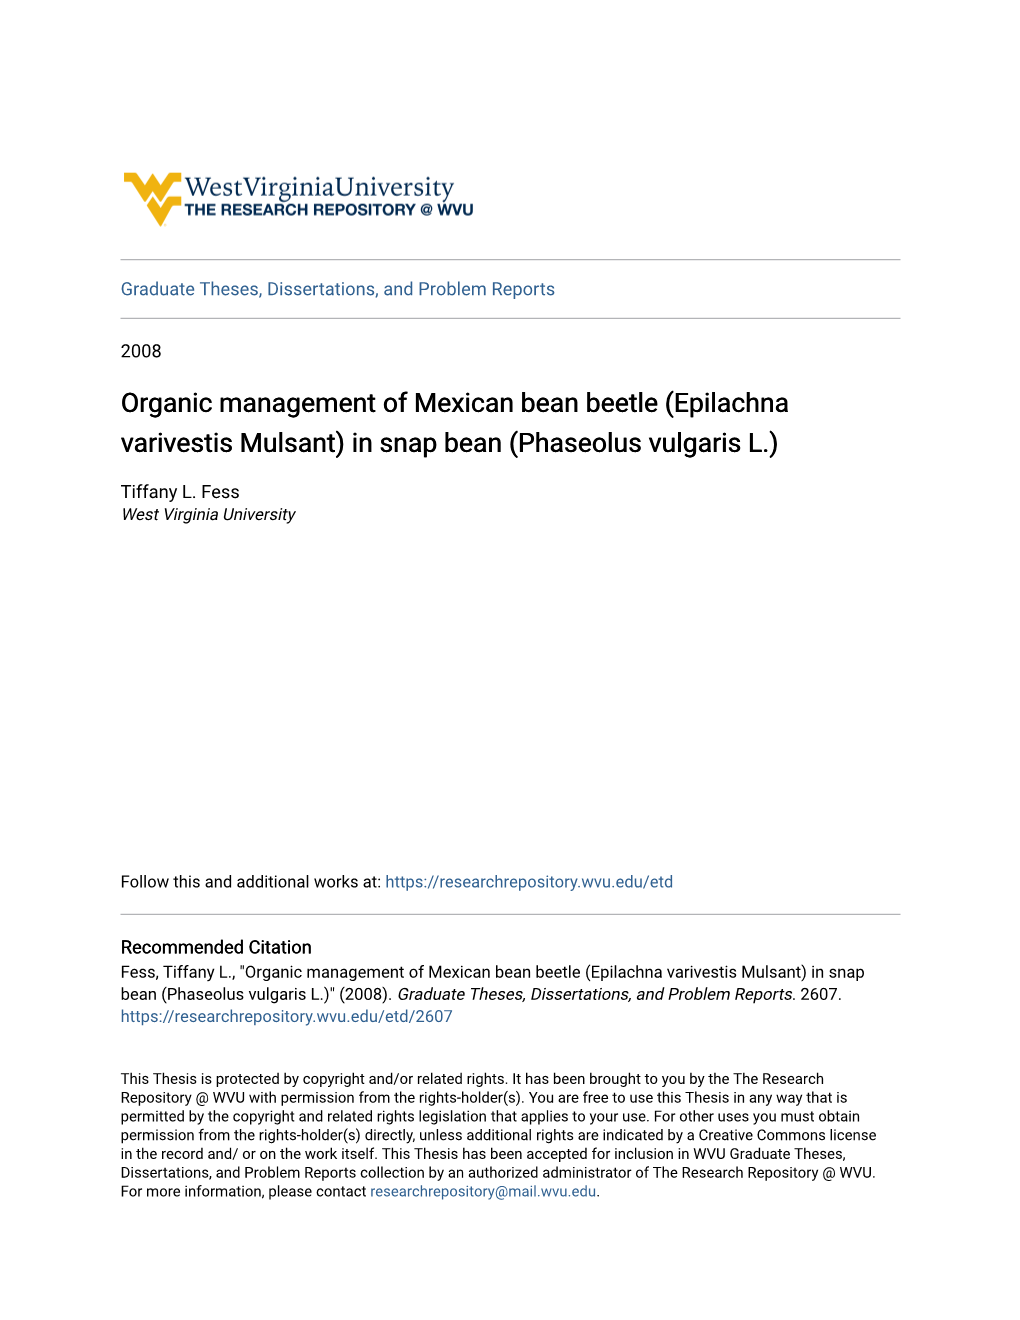 Organic Management of Mexican Bean Beetle (Epilachna Varivestis Mulsant) in Snap Bean (Phaseolus Vulgaris L.)